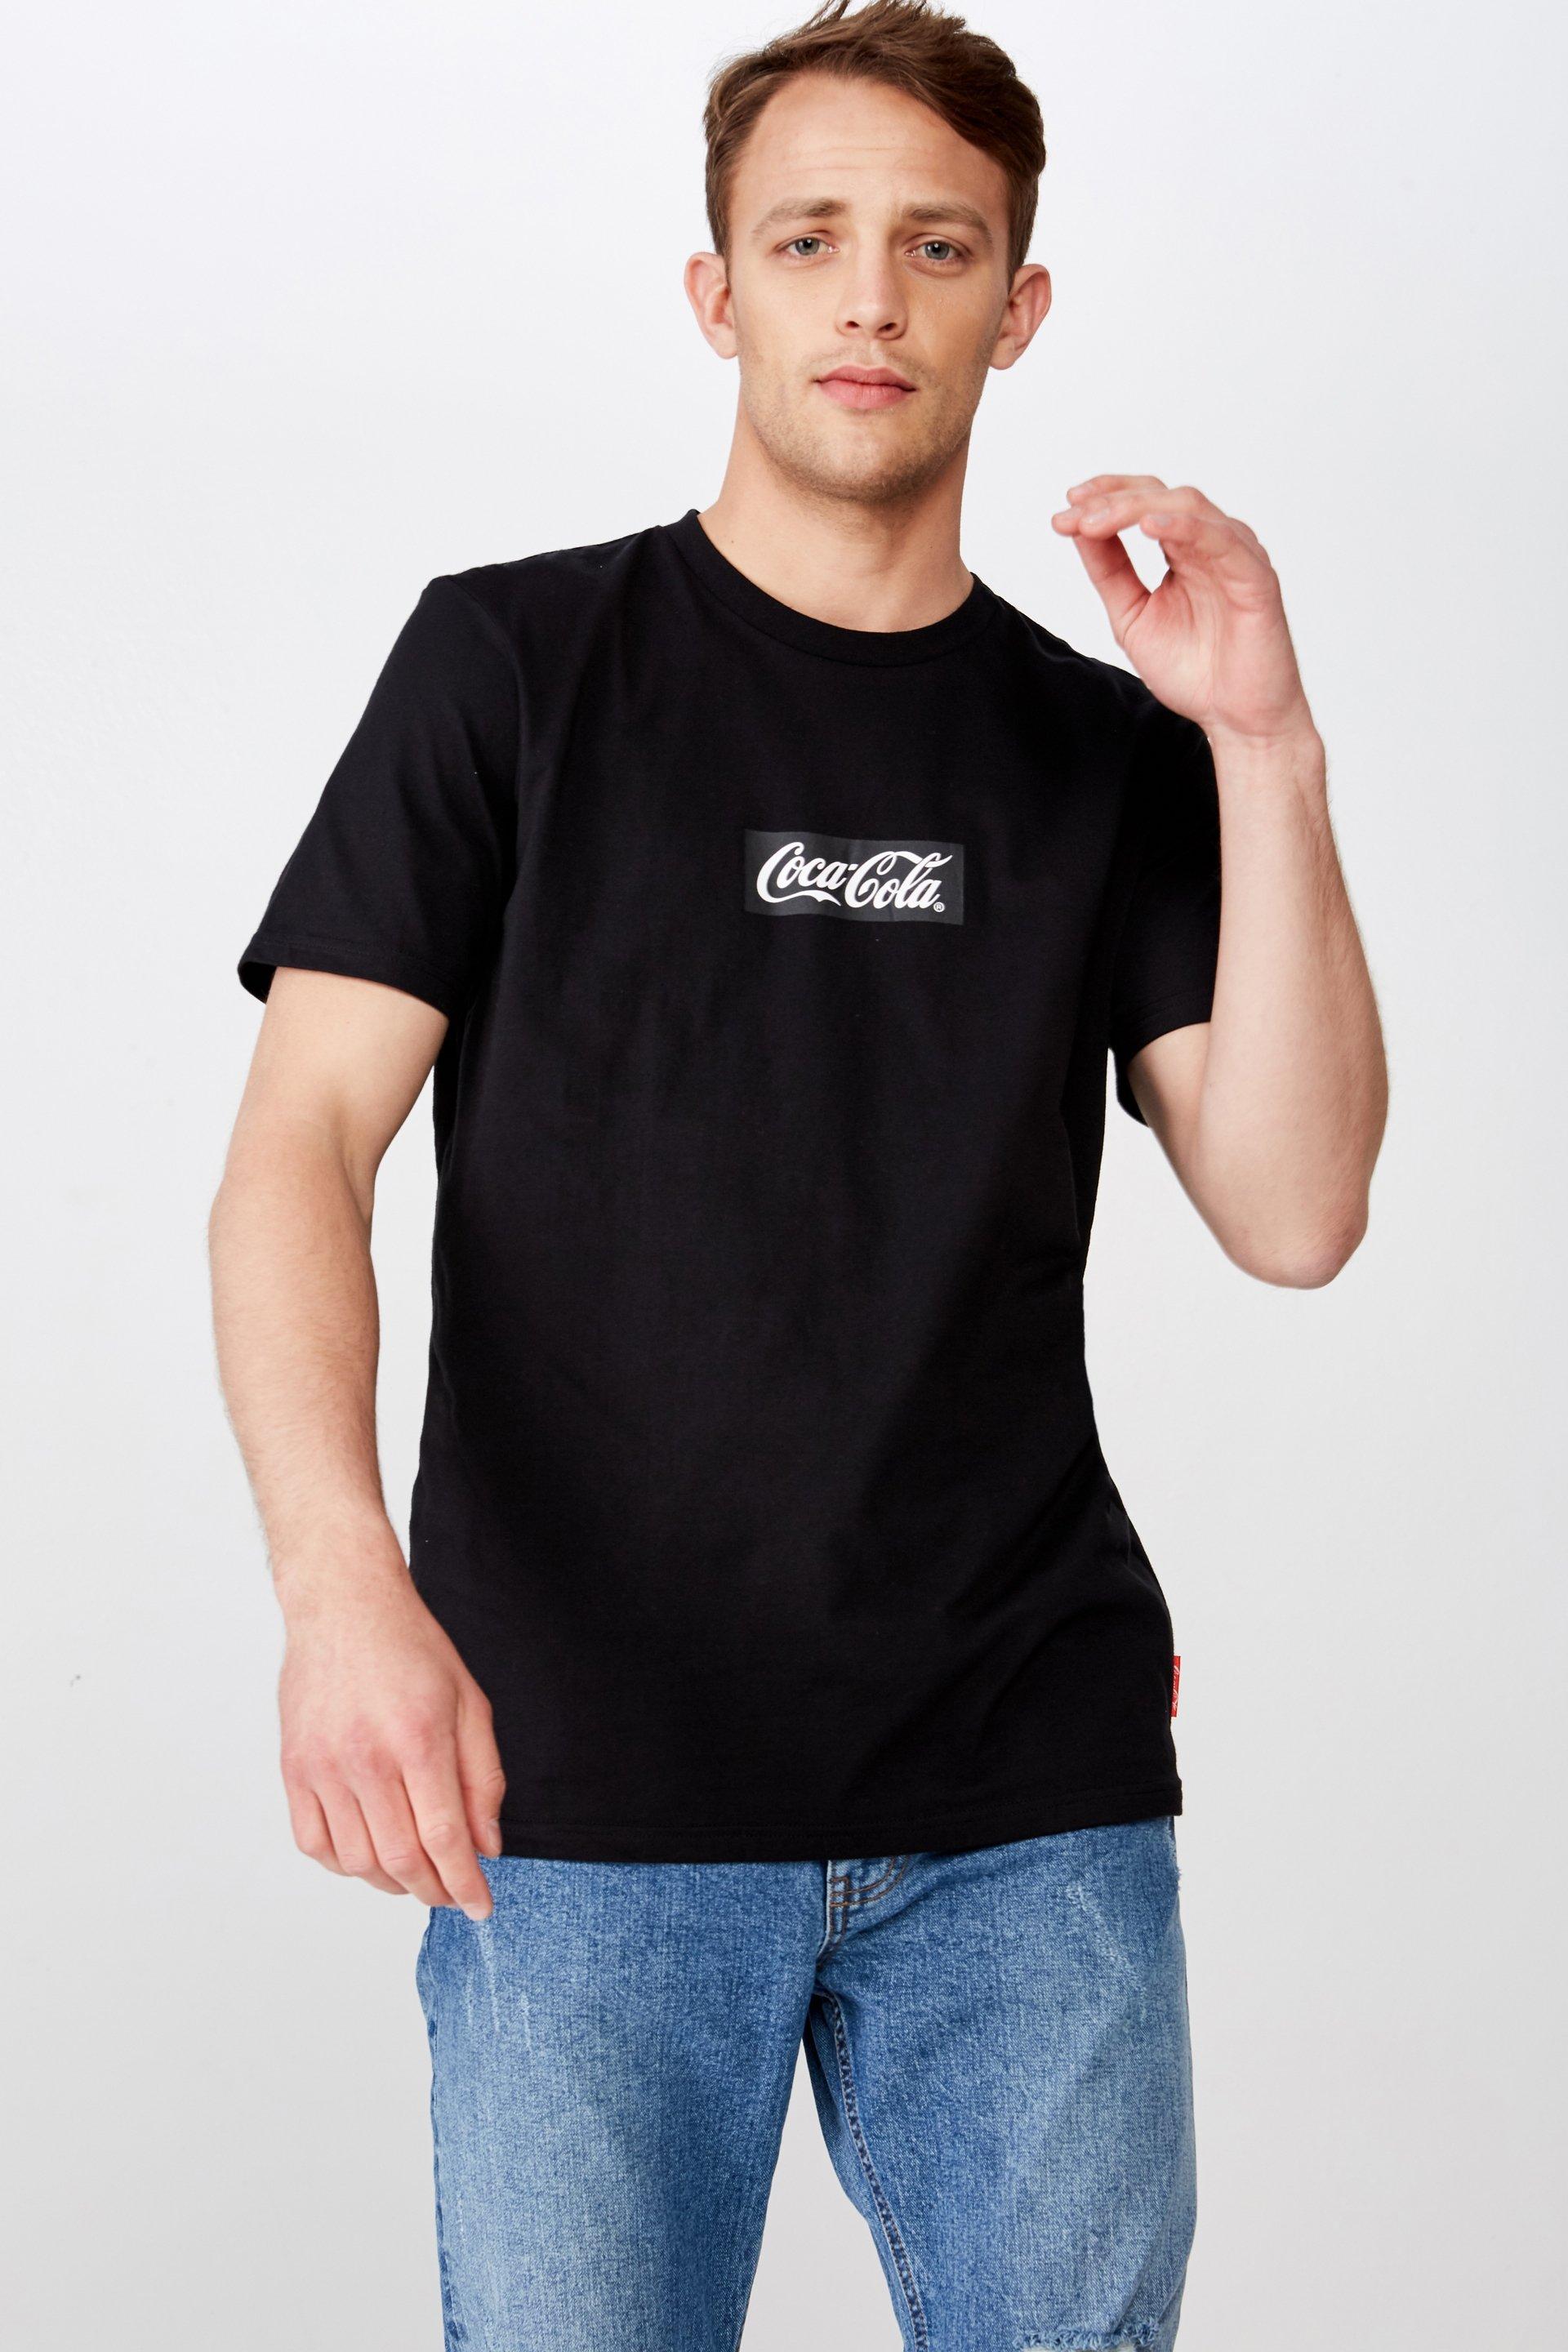 Coke box logo tee - black Cotton On T-Shirts & Vests | Superbalist.com